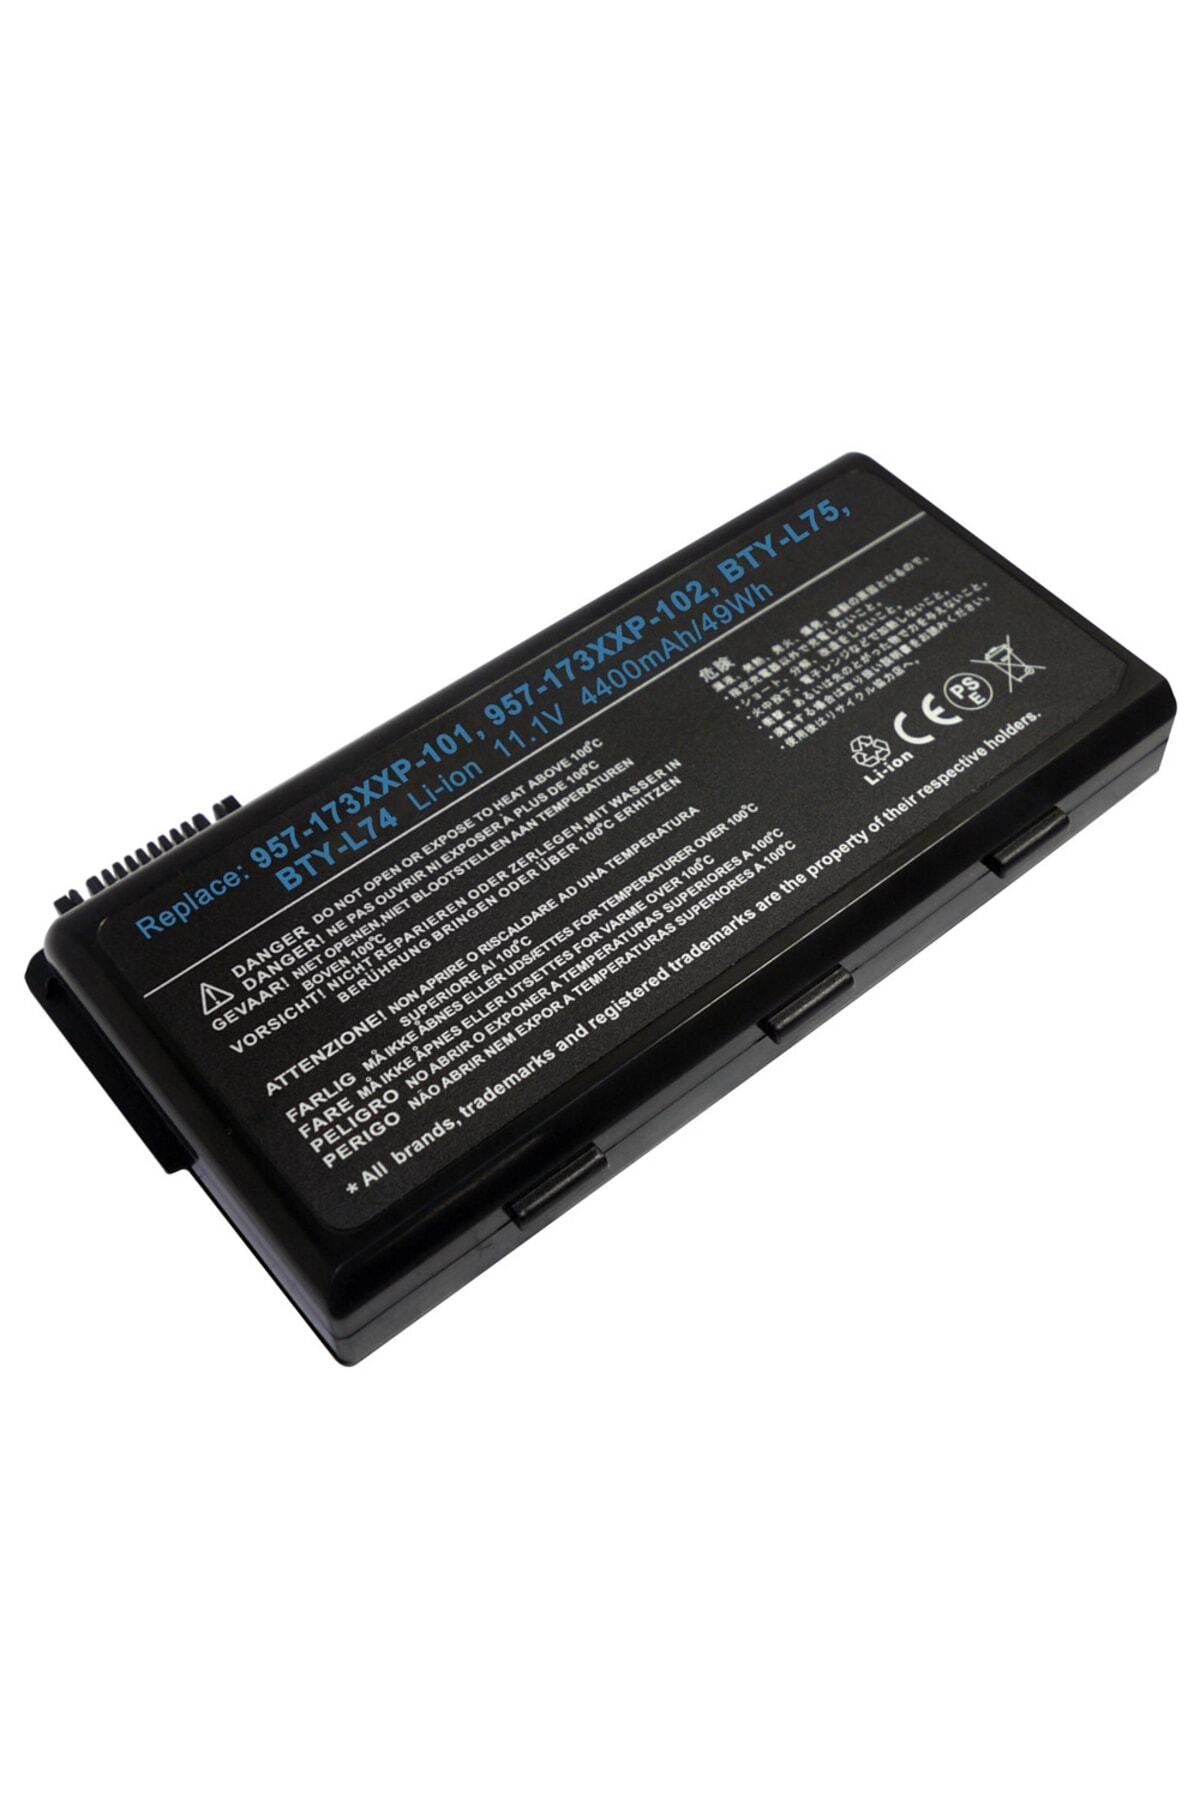 Retro Exper - Msı Bty-l74 Bty-l75 Ms-168b Ms-168 Notebook Bataryası - Pili